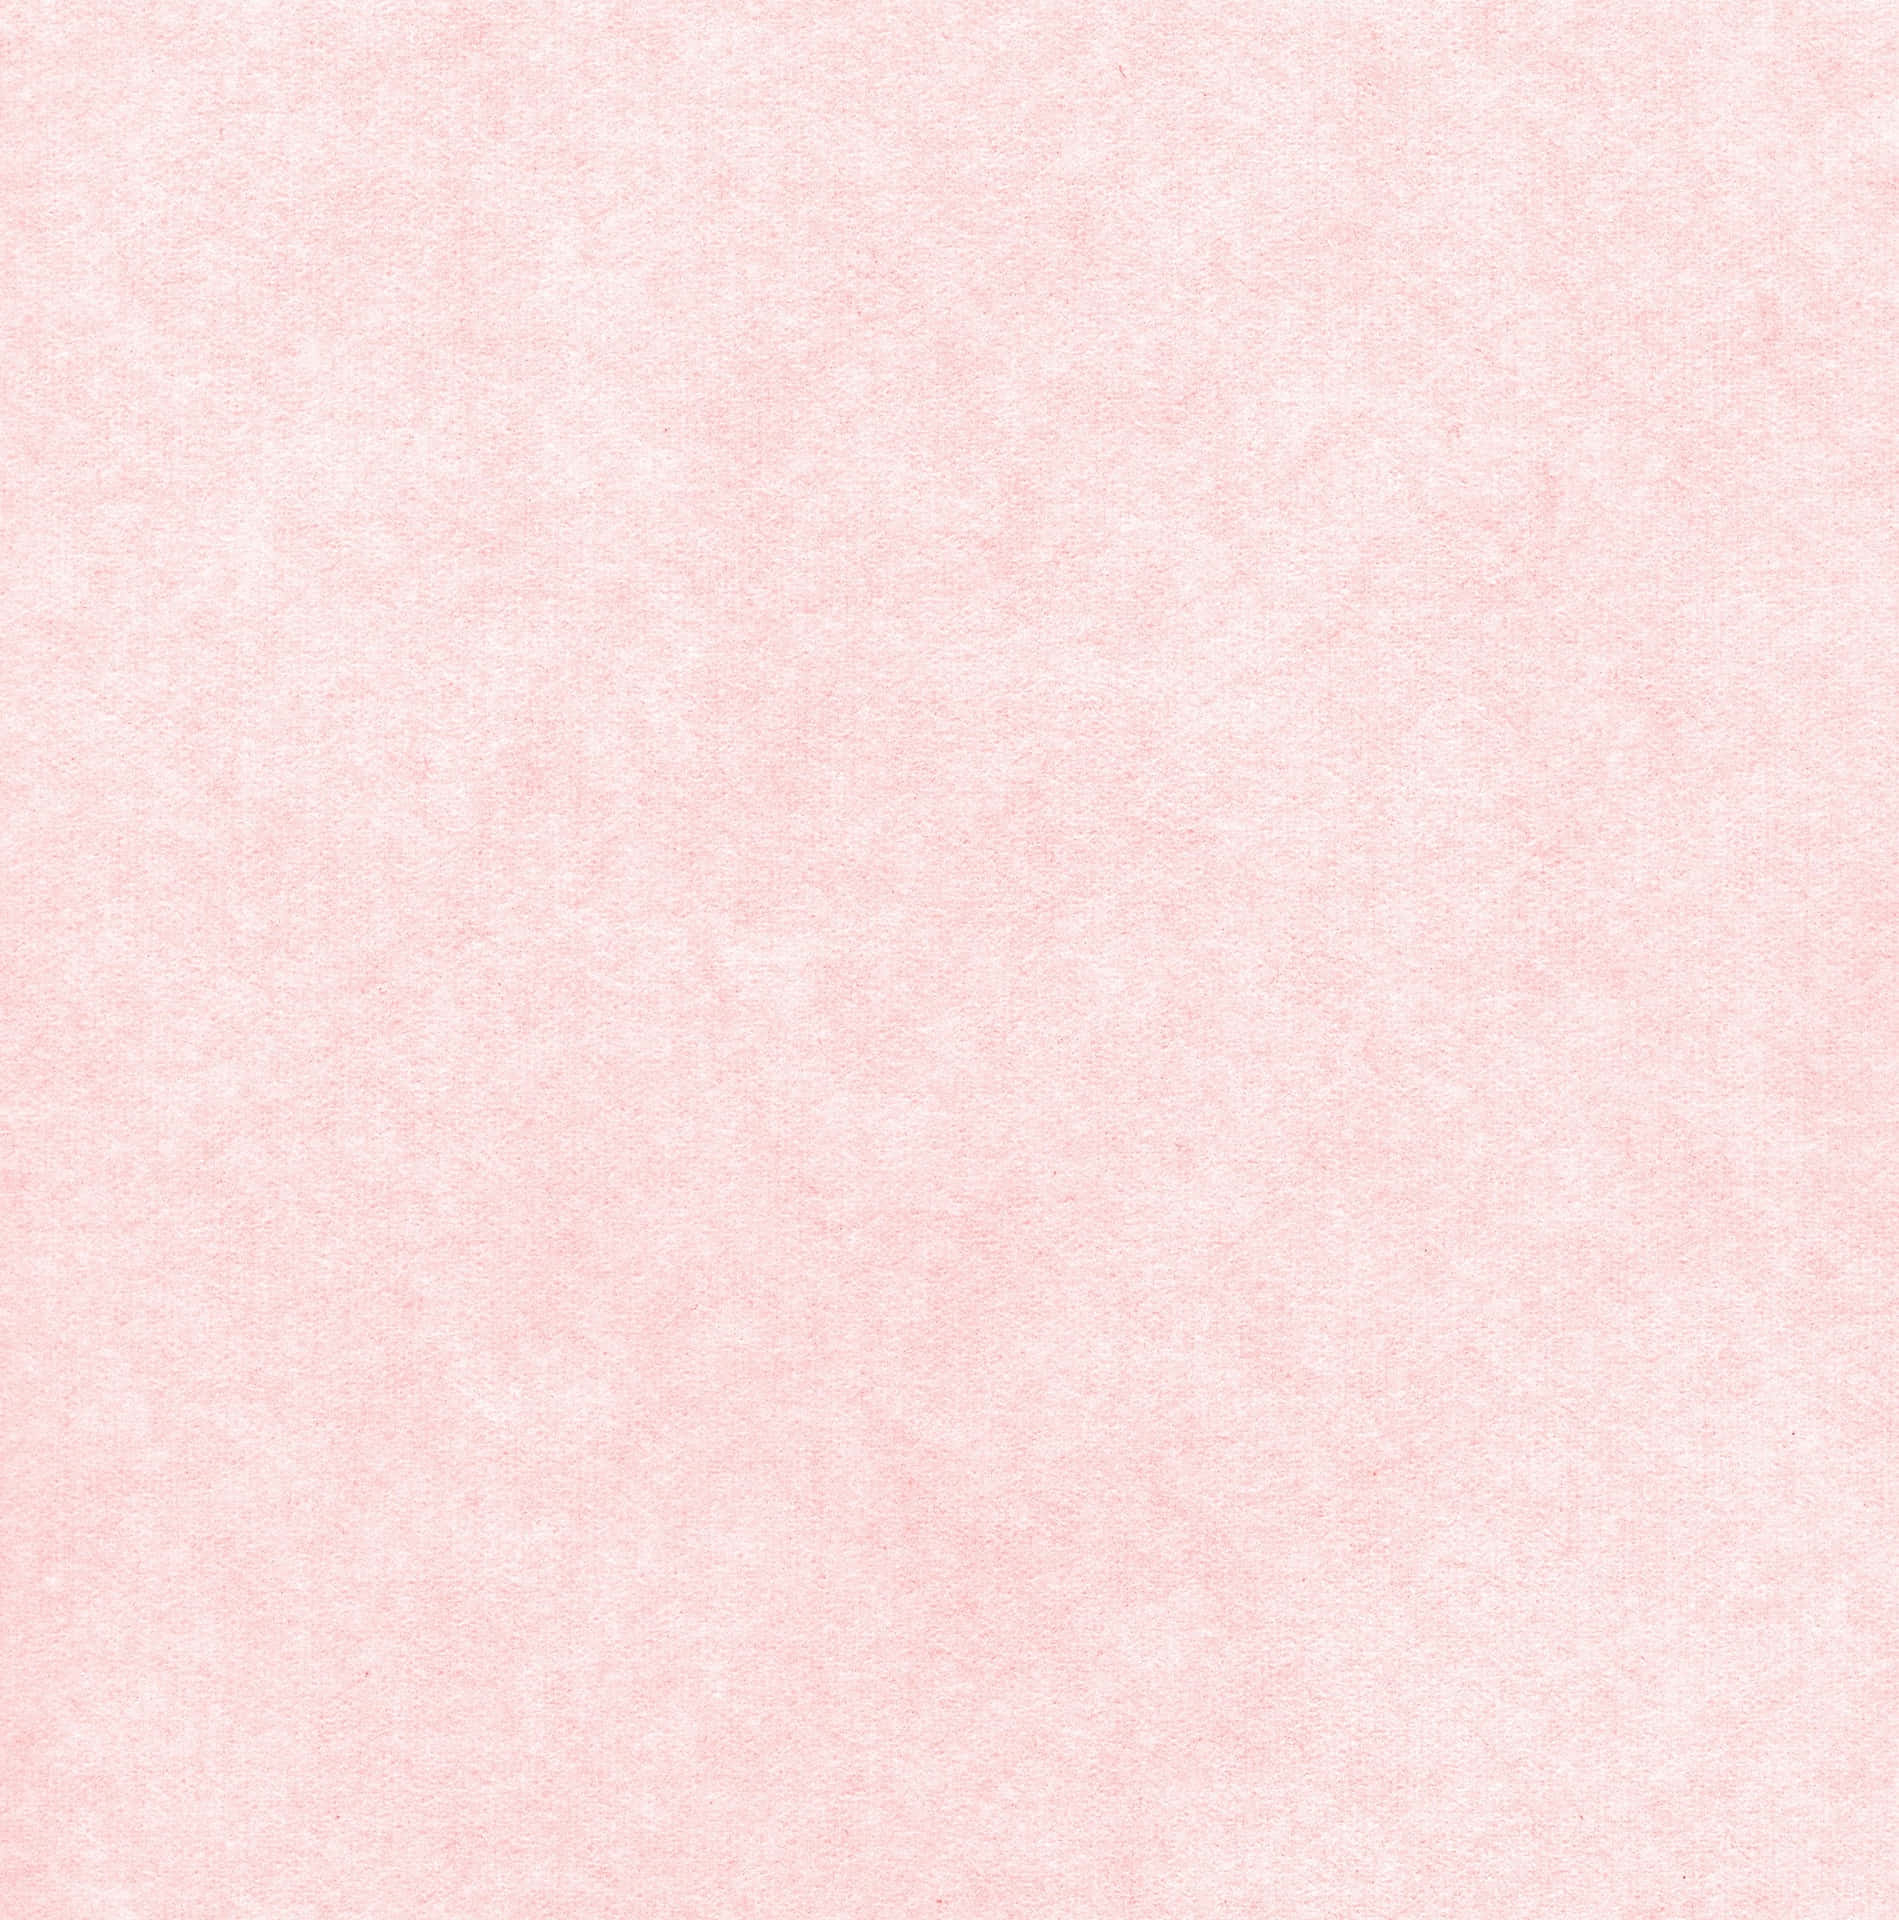 Fondode Textura Suave Color Rosa.